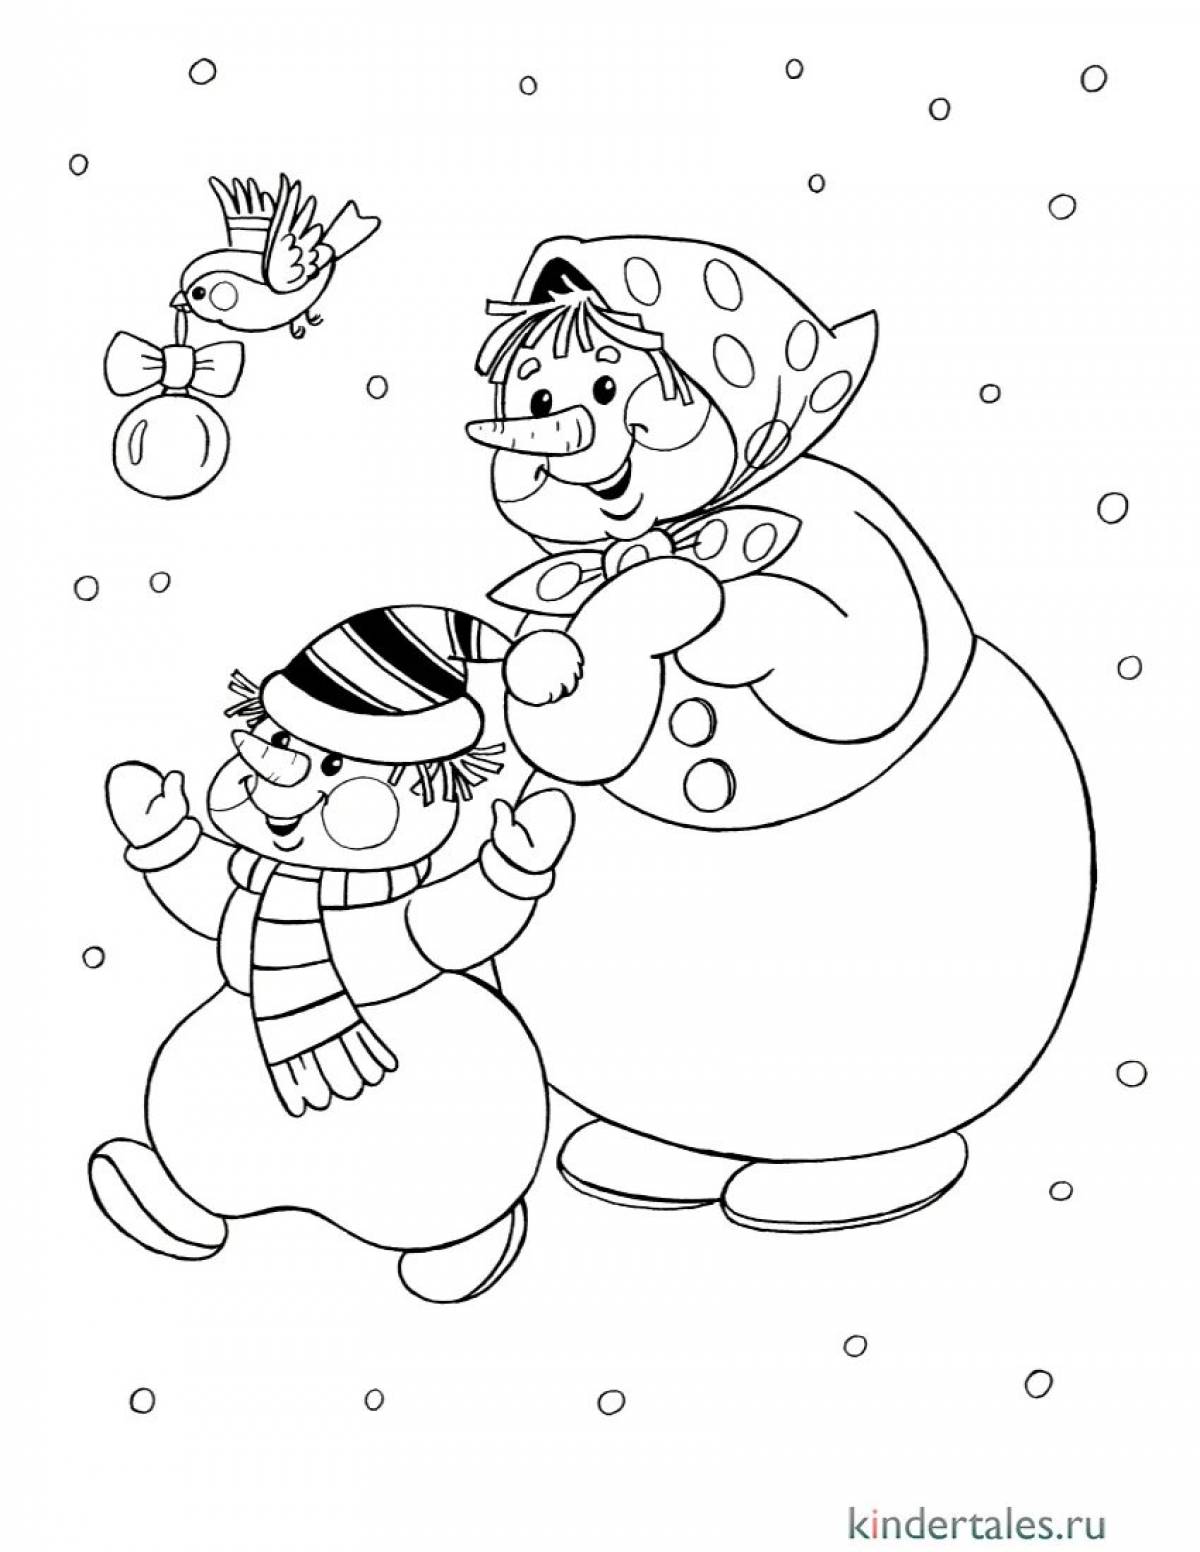 Snowman for kids #10